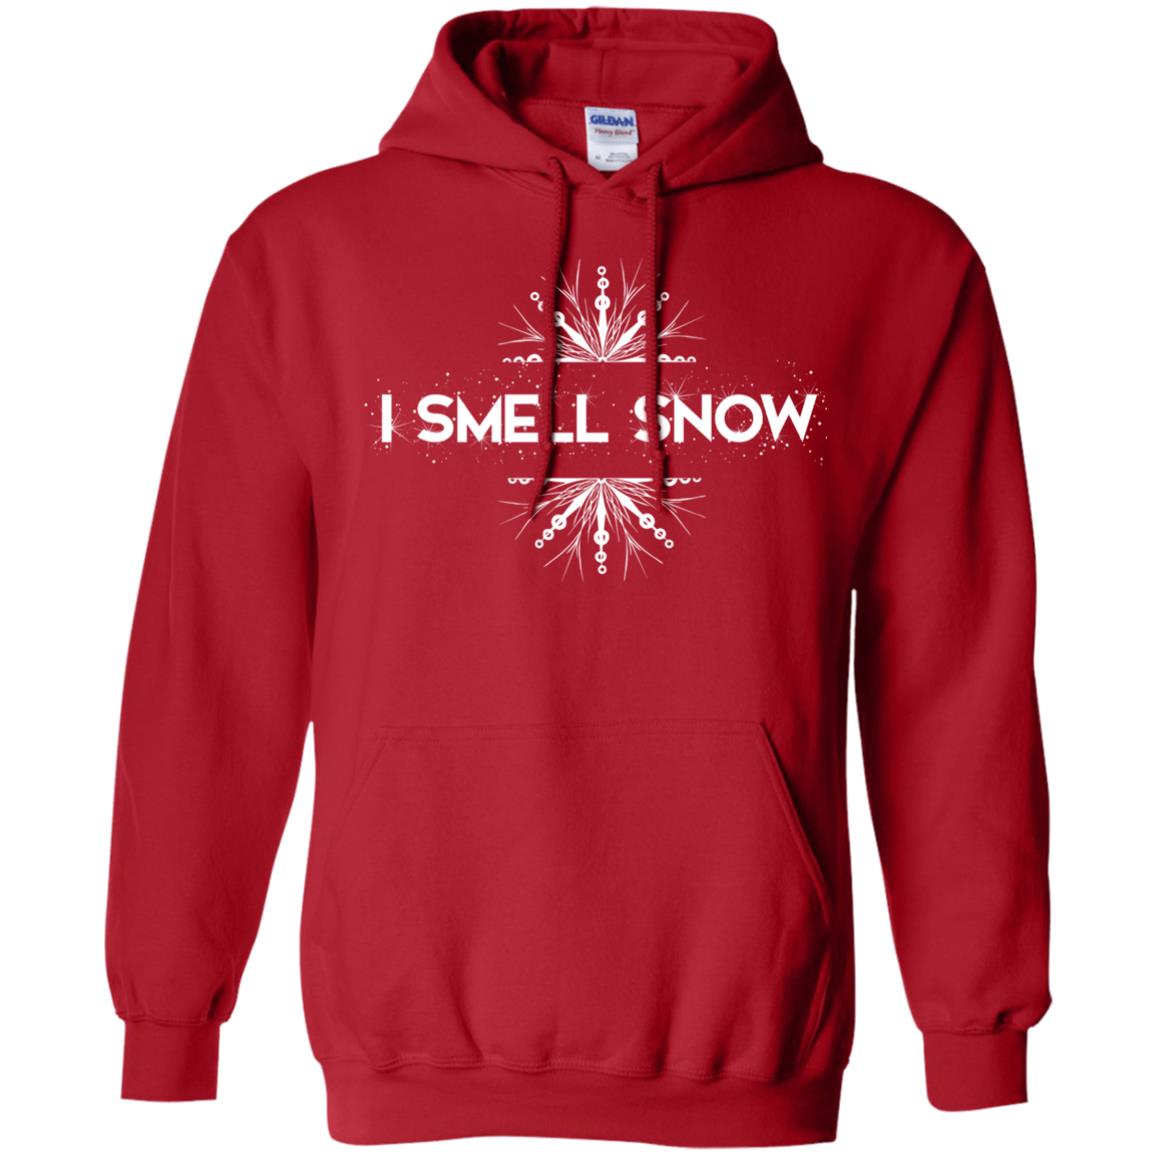 Lorelai Gilmore: I smell snow ugly sweatshirt, Christmas sweater - Rockatee